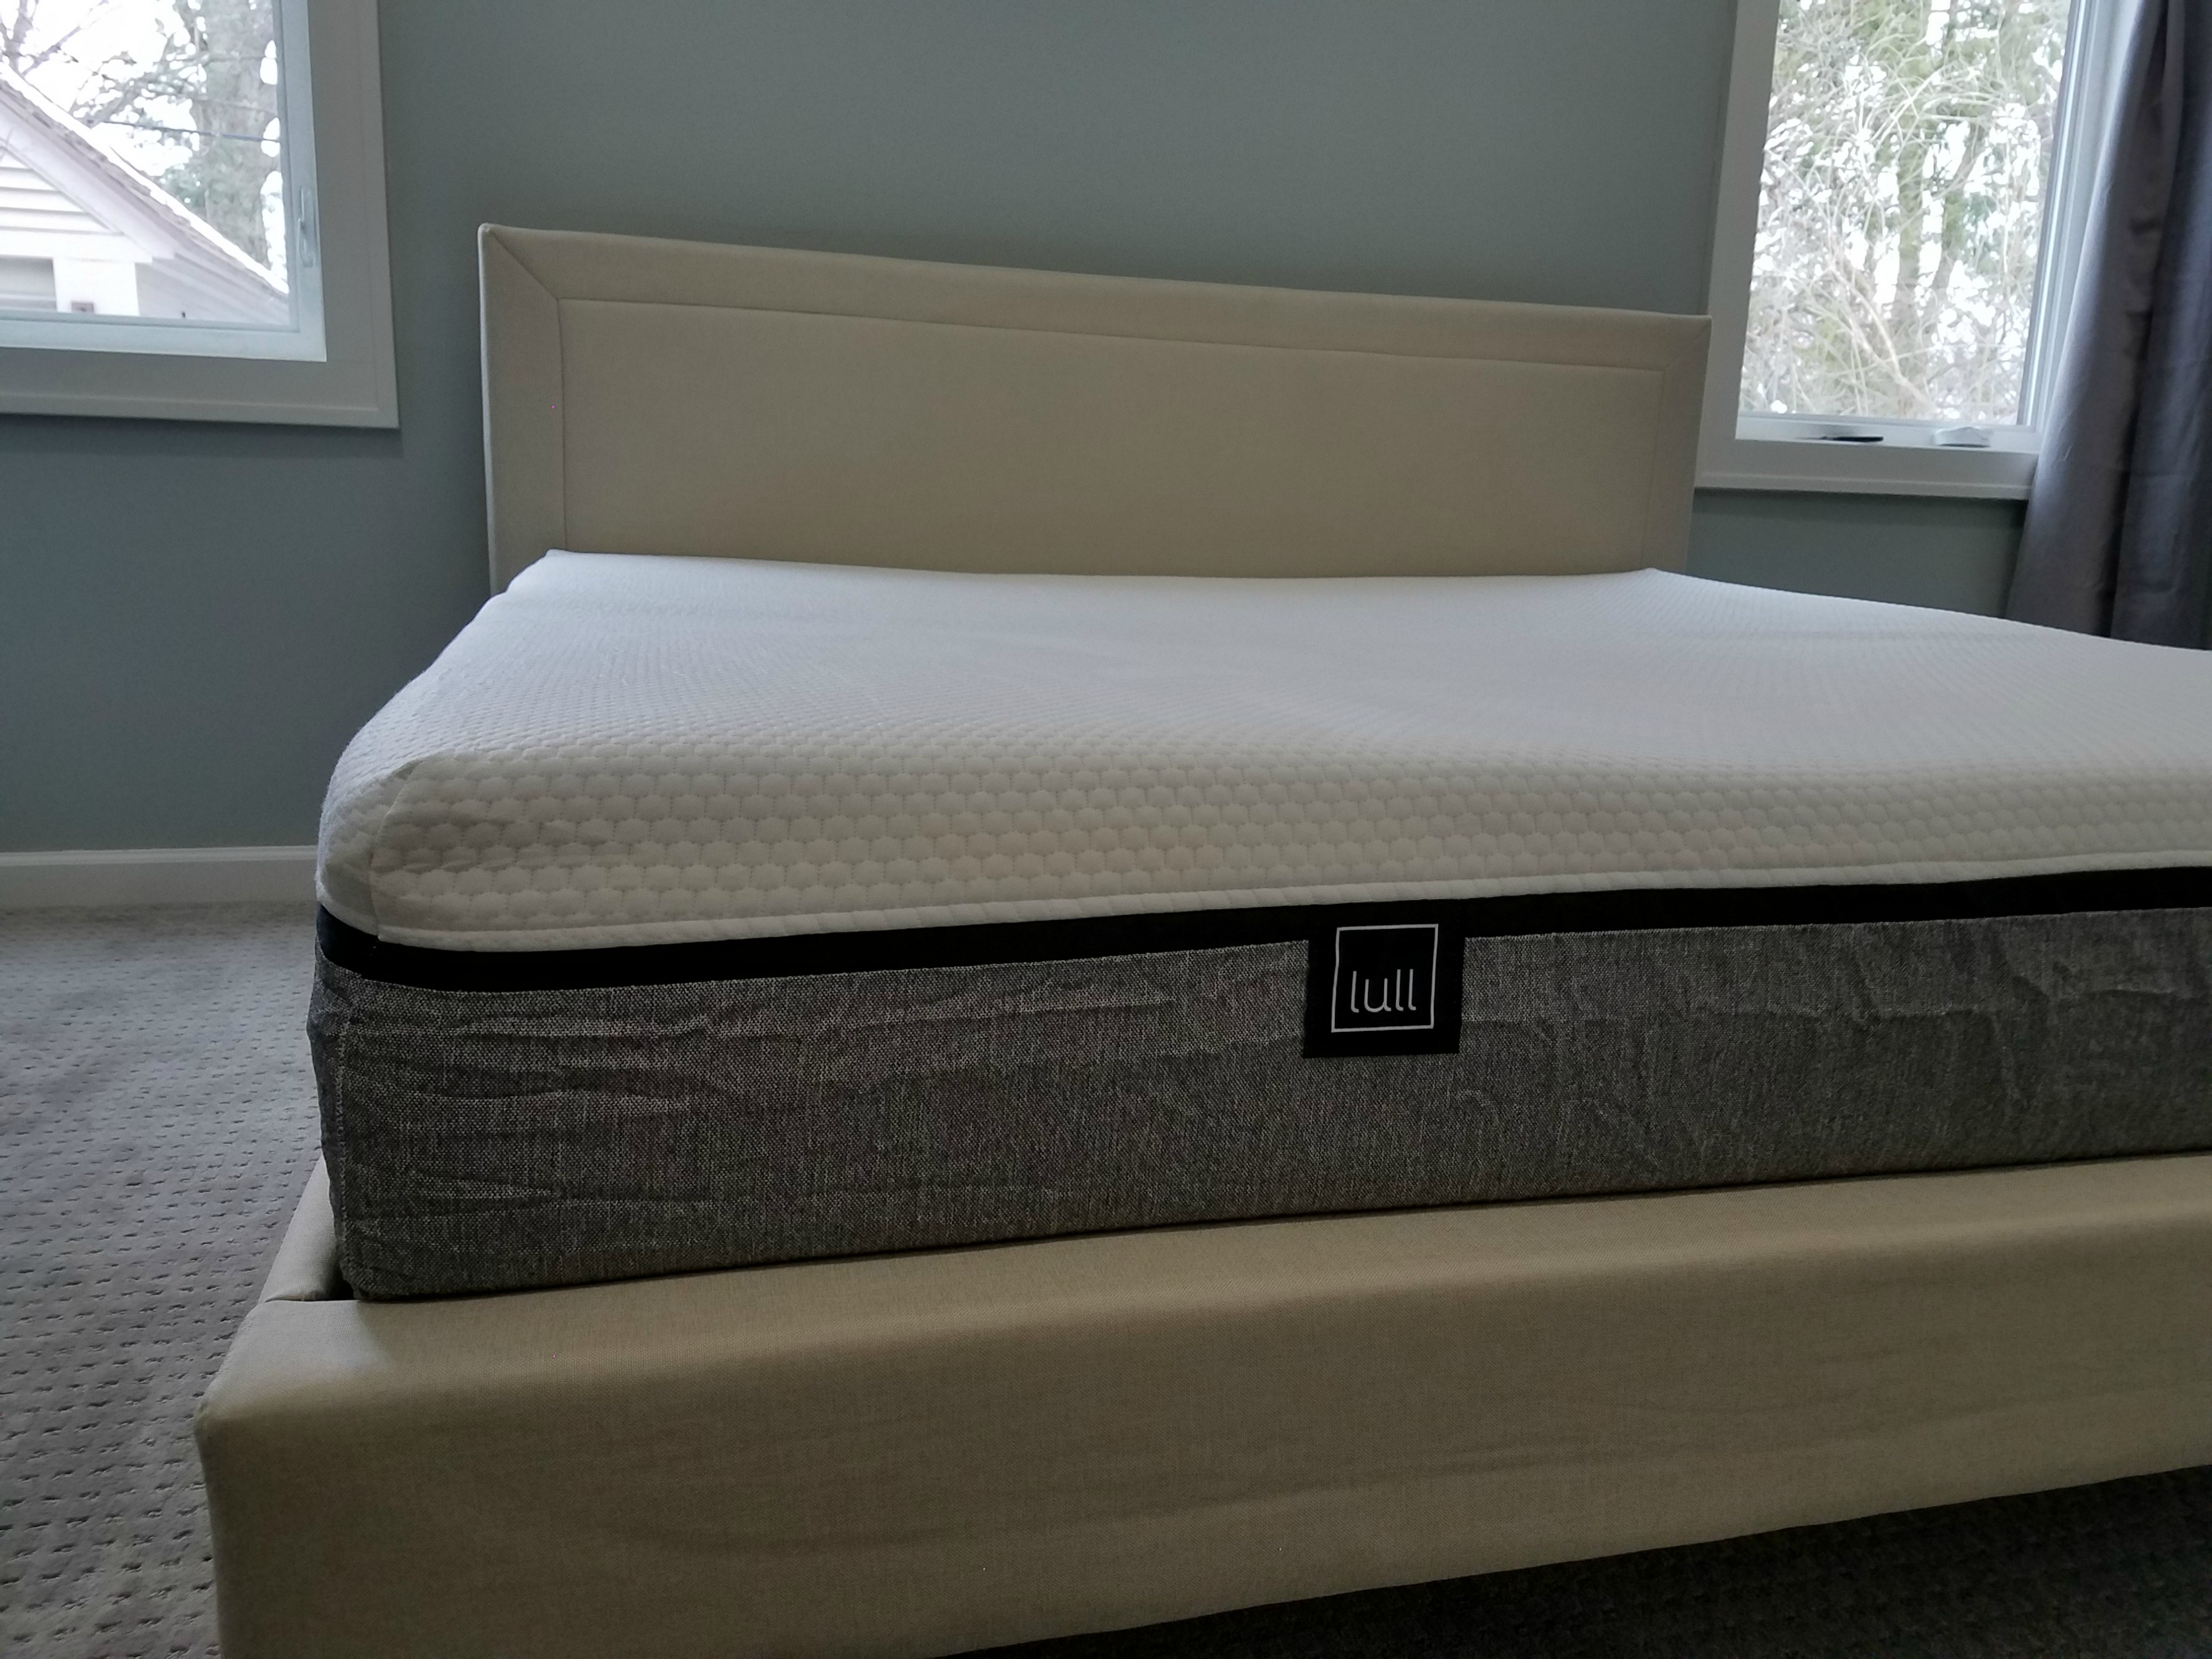 lull king mattress for sale